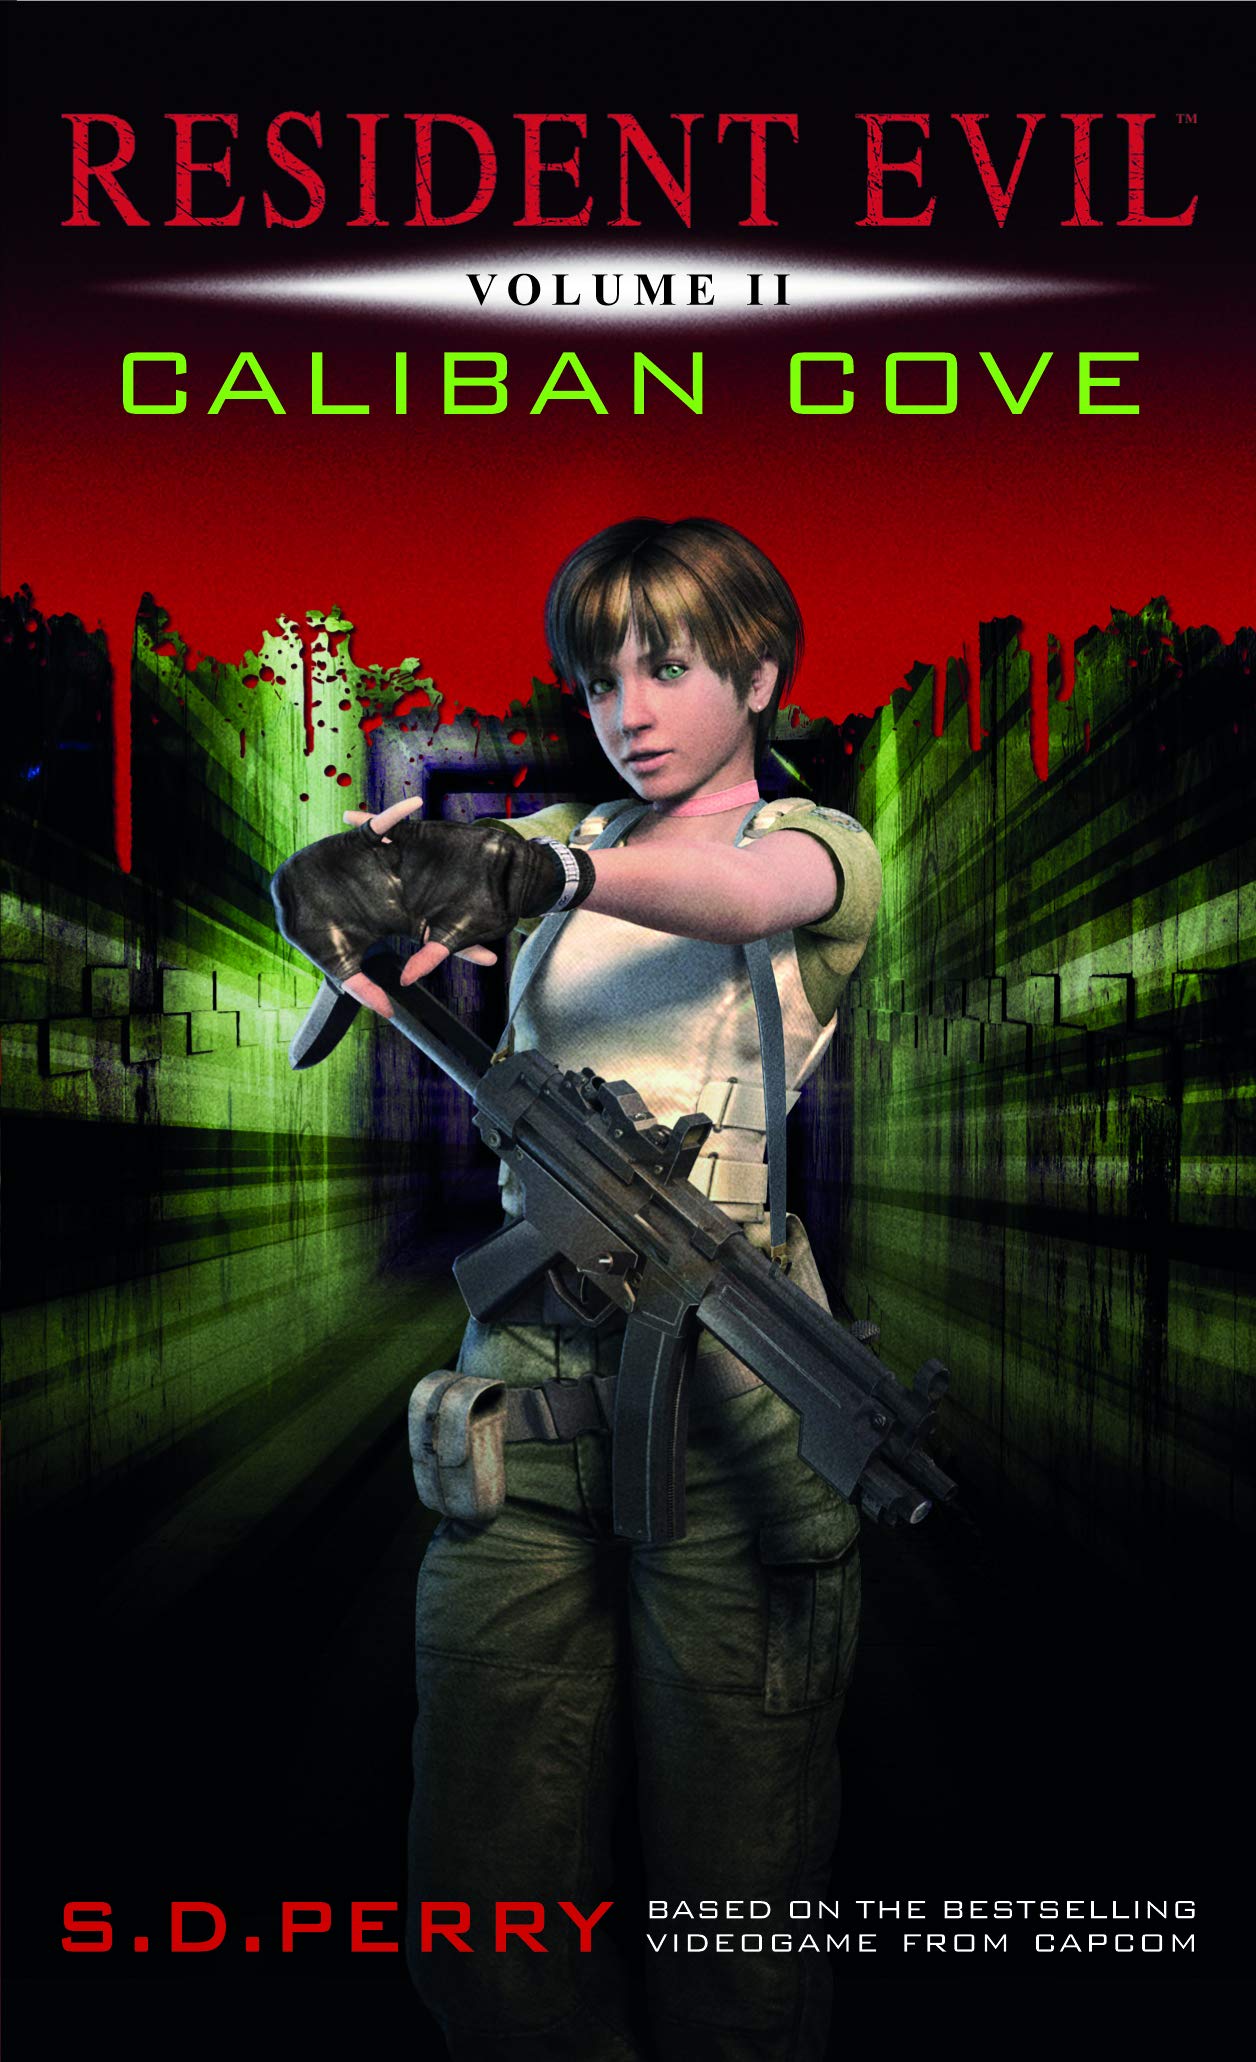 Caliban Cove Resident Evil Vol II